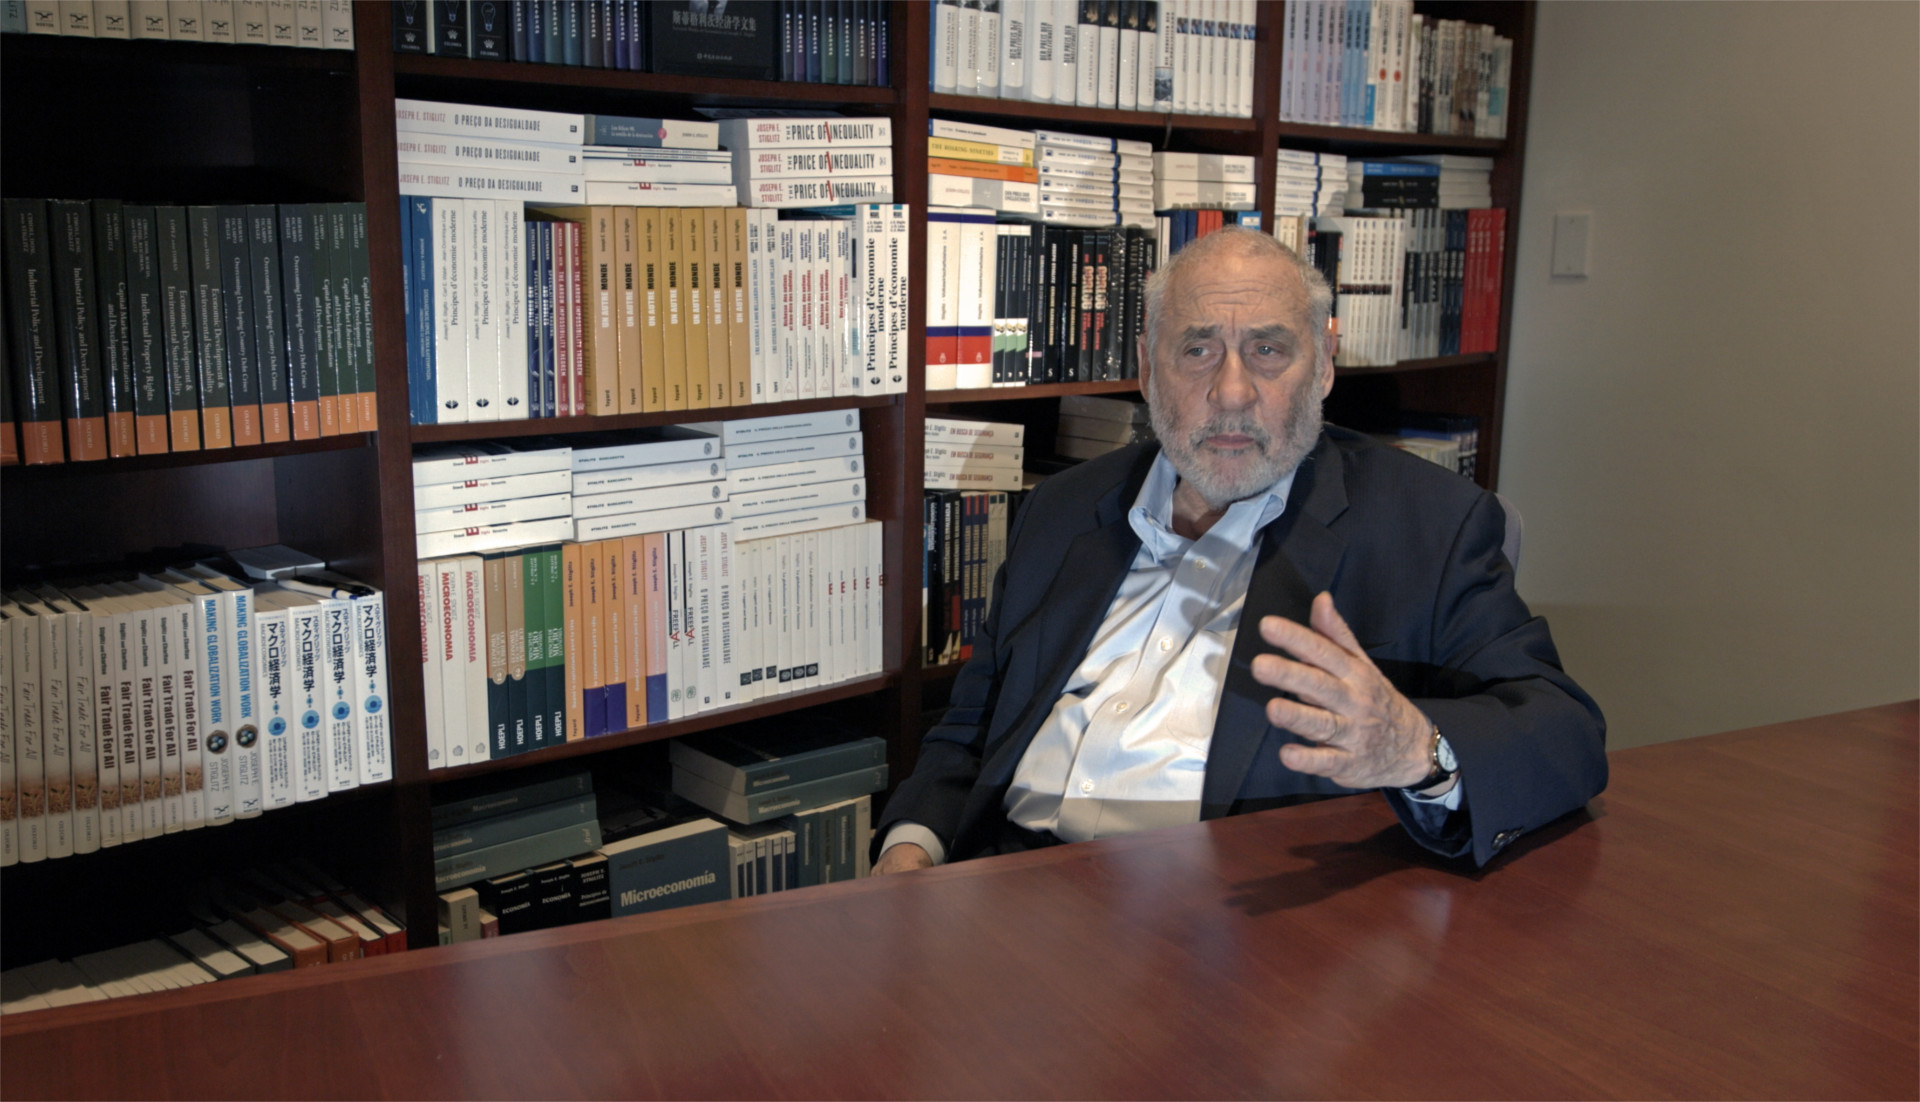 Disparity Film Still, Joseph Stiglitz sitting in front of bookshelf